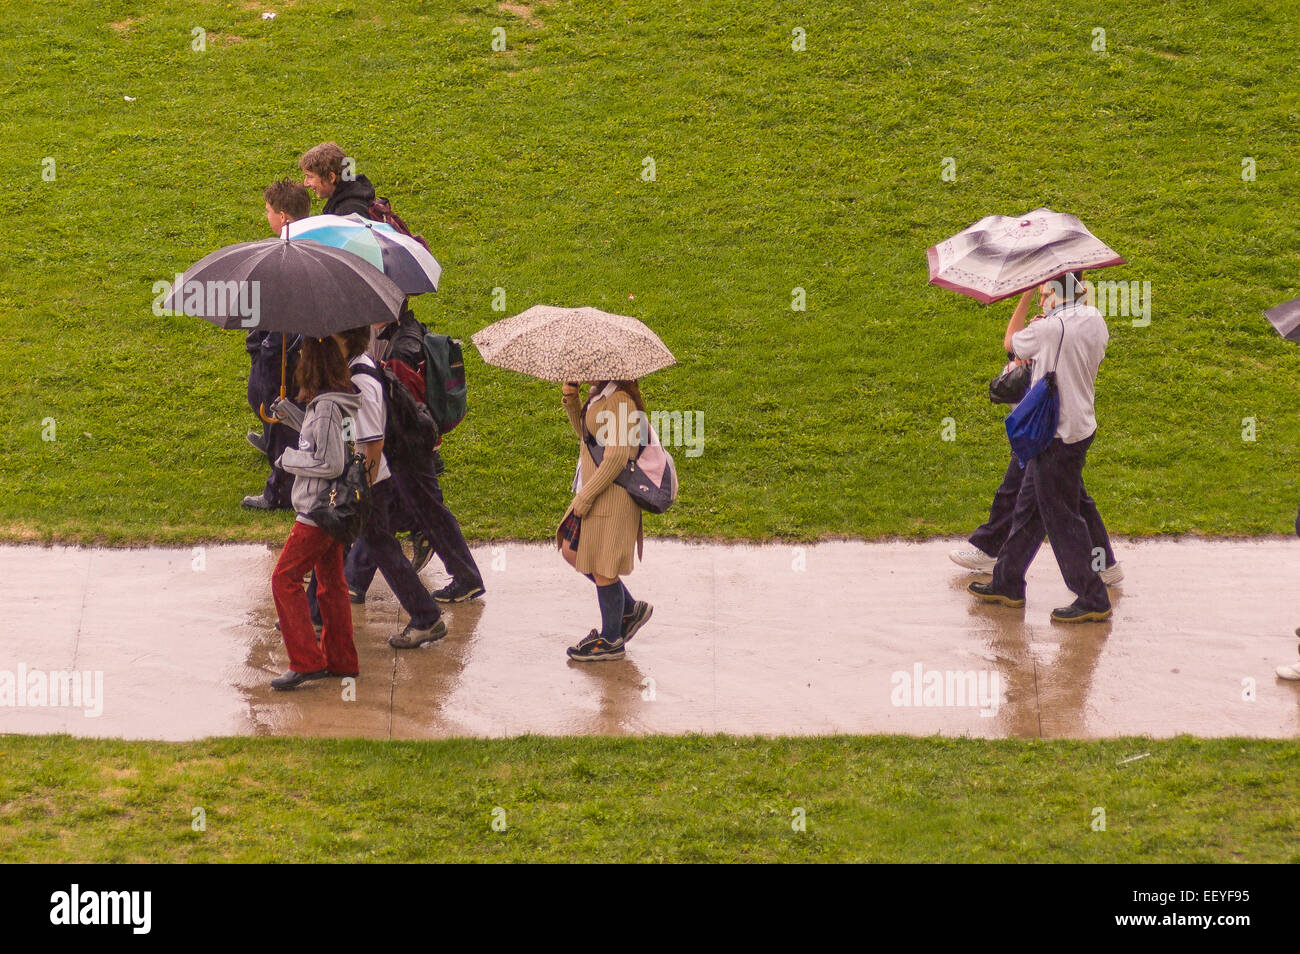 QUEBEC CITY, QUEBEC, CANADA - People with umbrellas in rain. Stock Photo